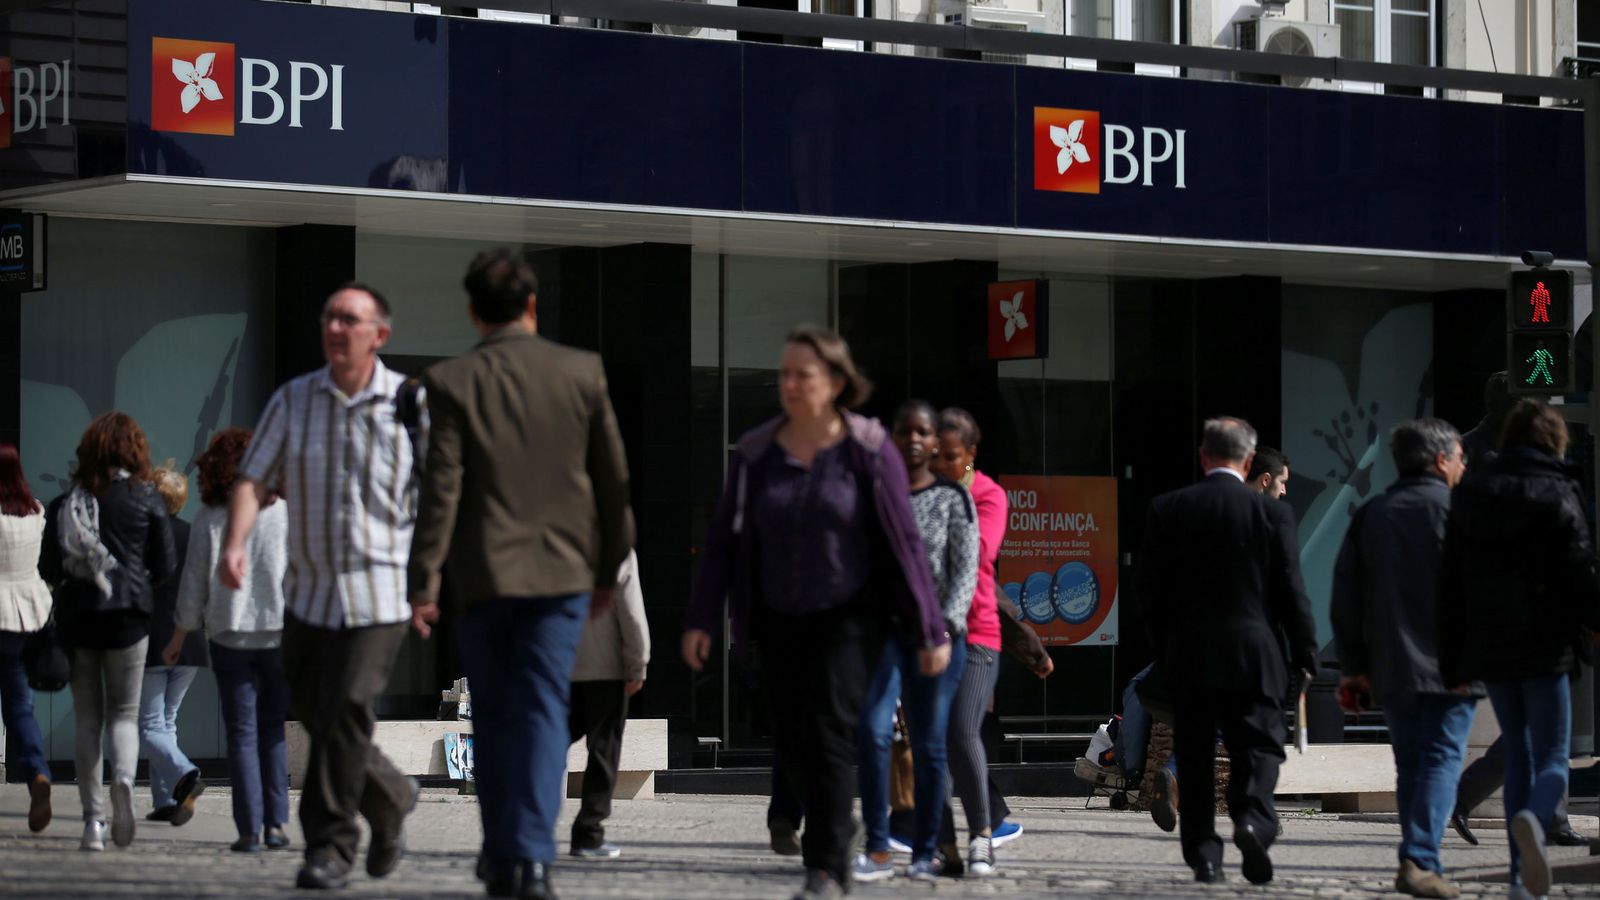 Foto: Oficinas del banco portugues opado por Caixabank BPI. (Reuters)